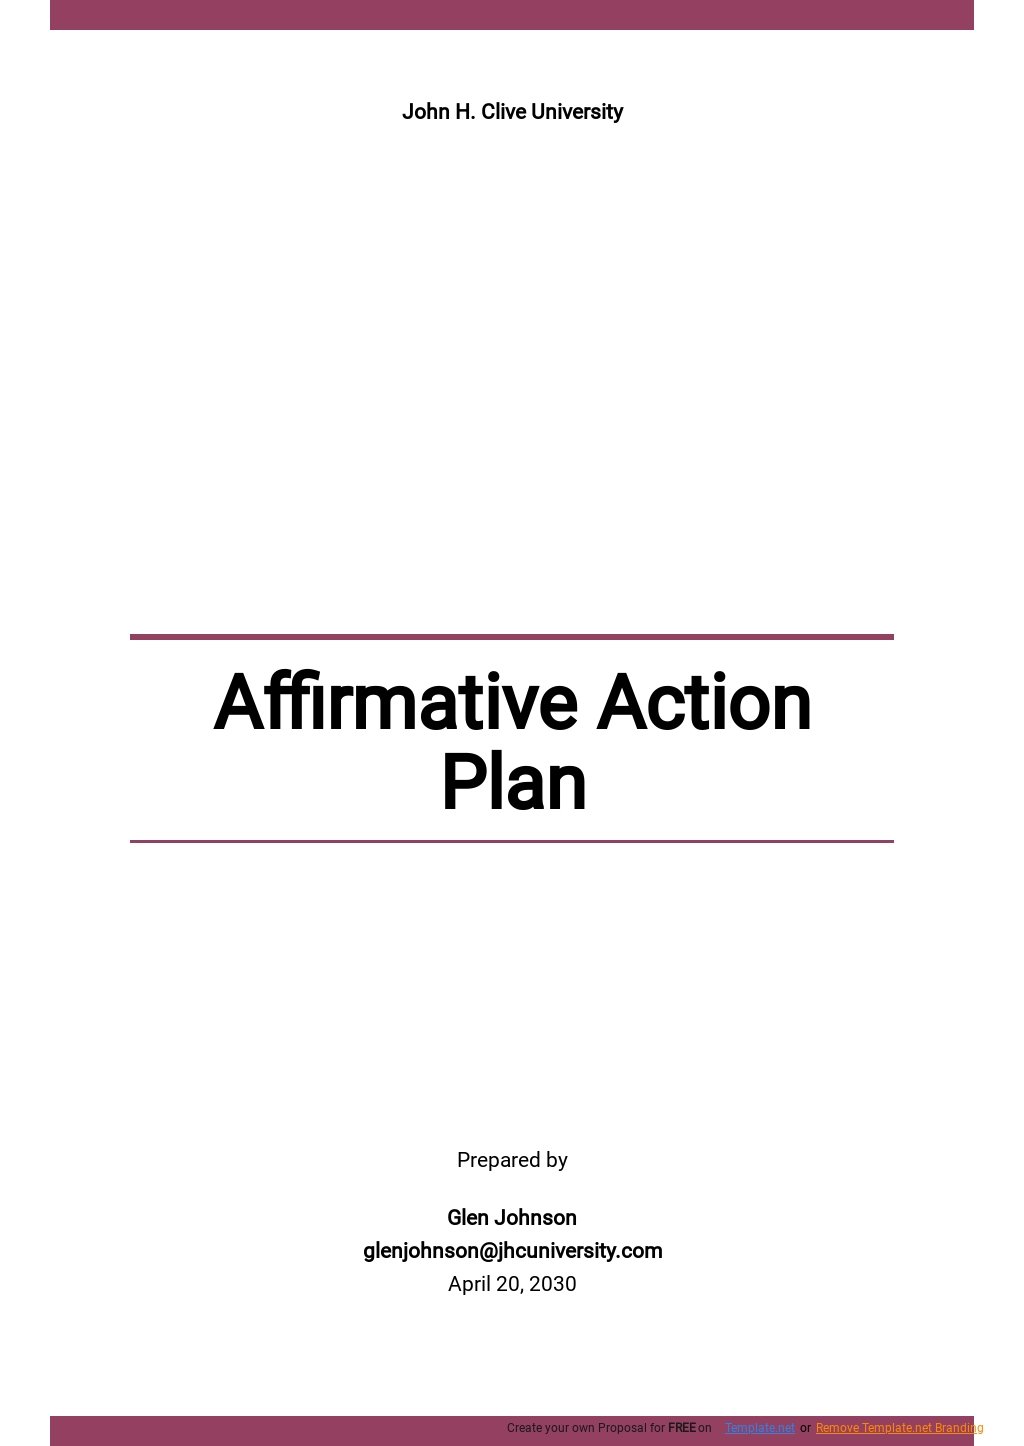 University Affirmative Action Plan Template.jpe